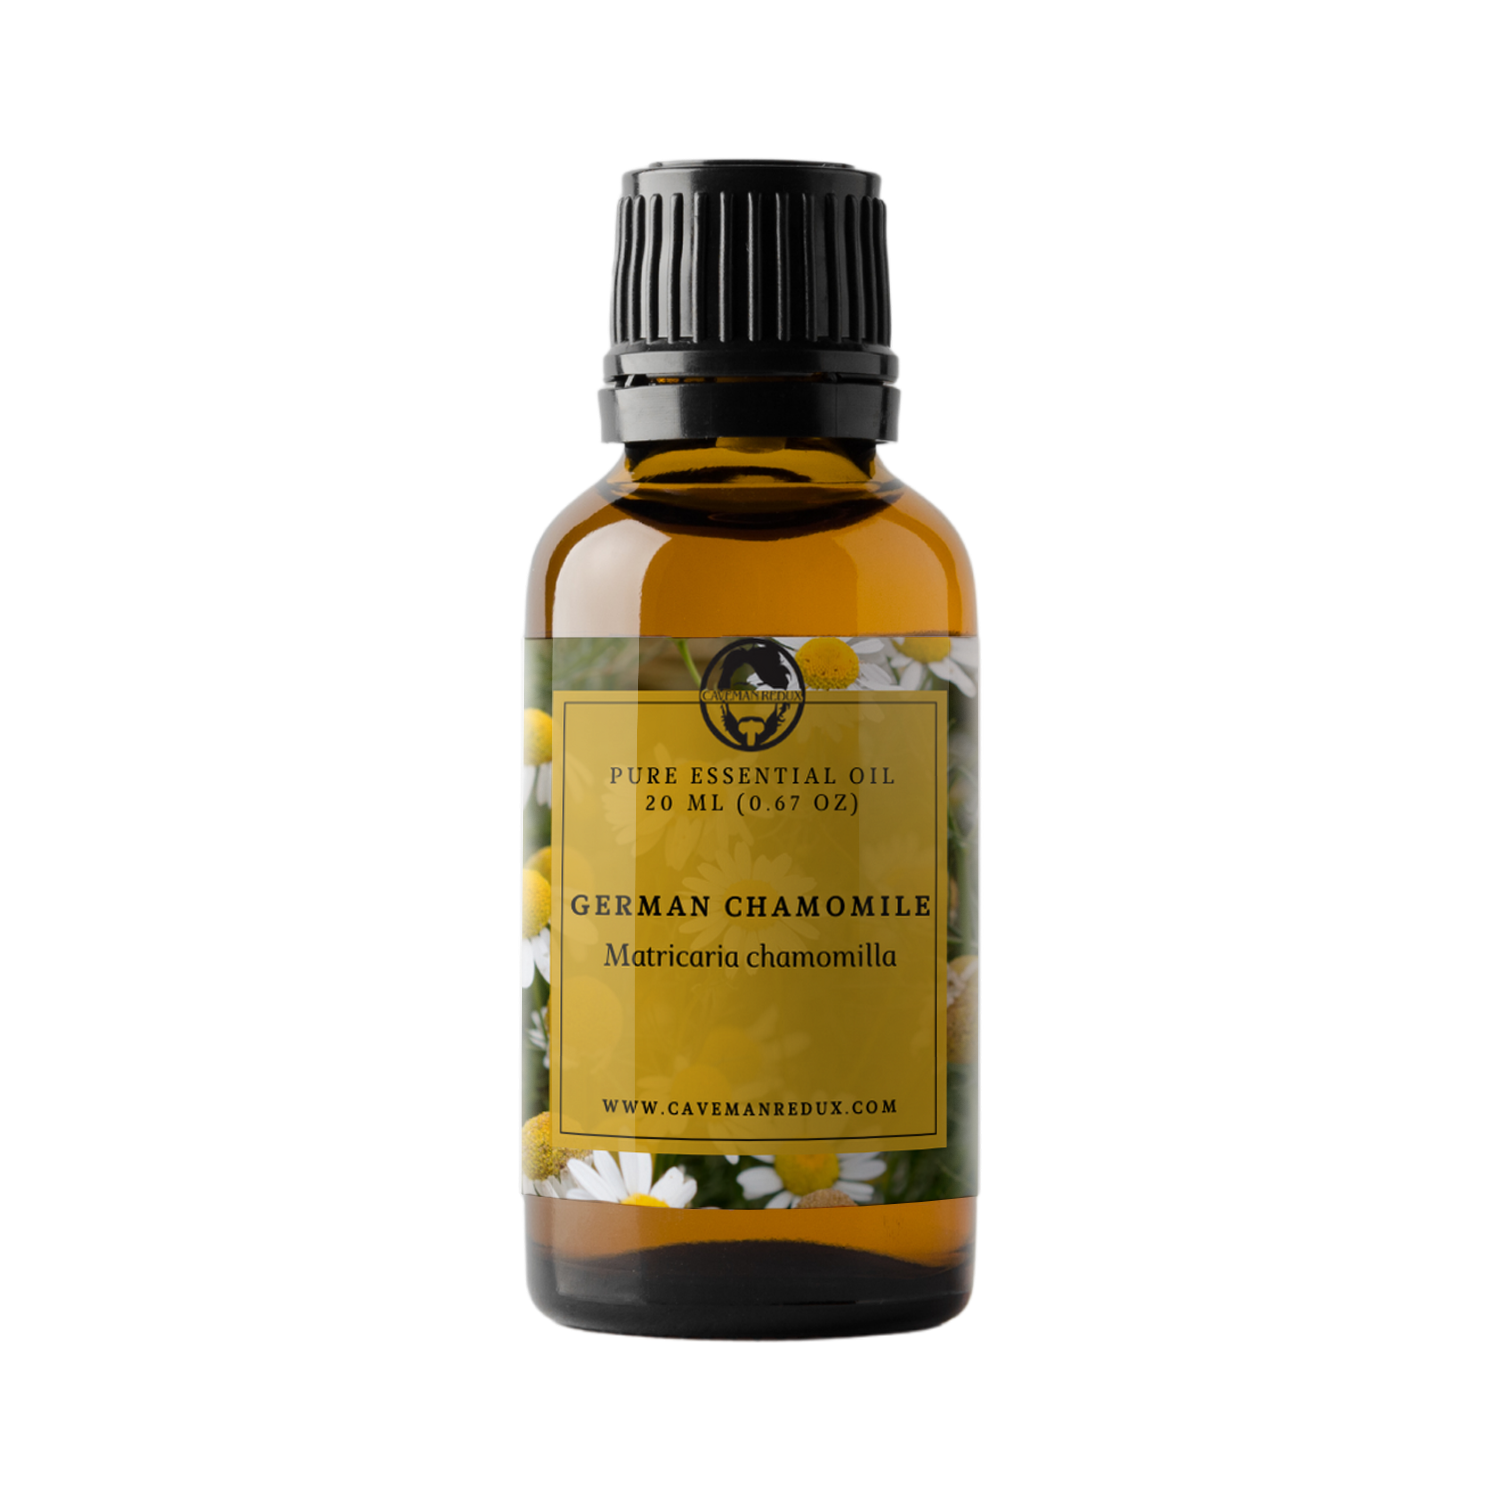 German chamomile essential oil